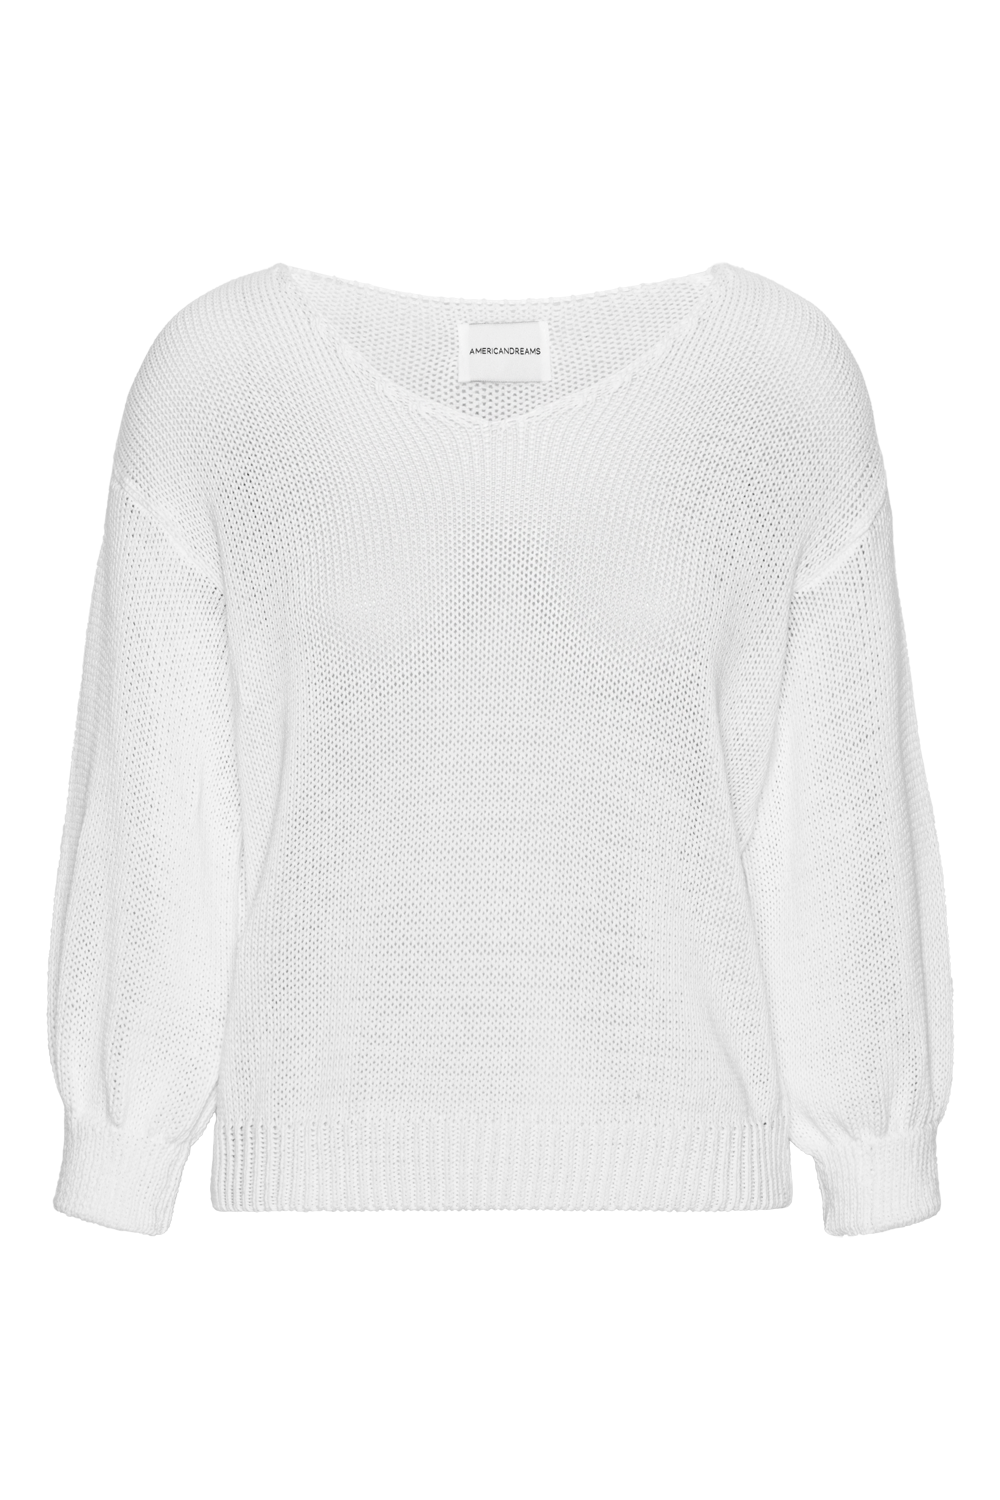 Milana LS Light Cotton Knit White